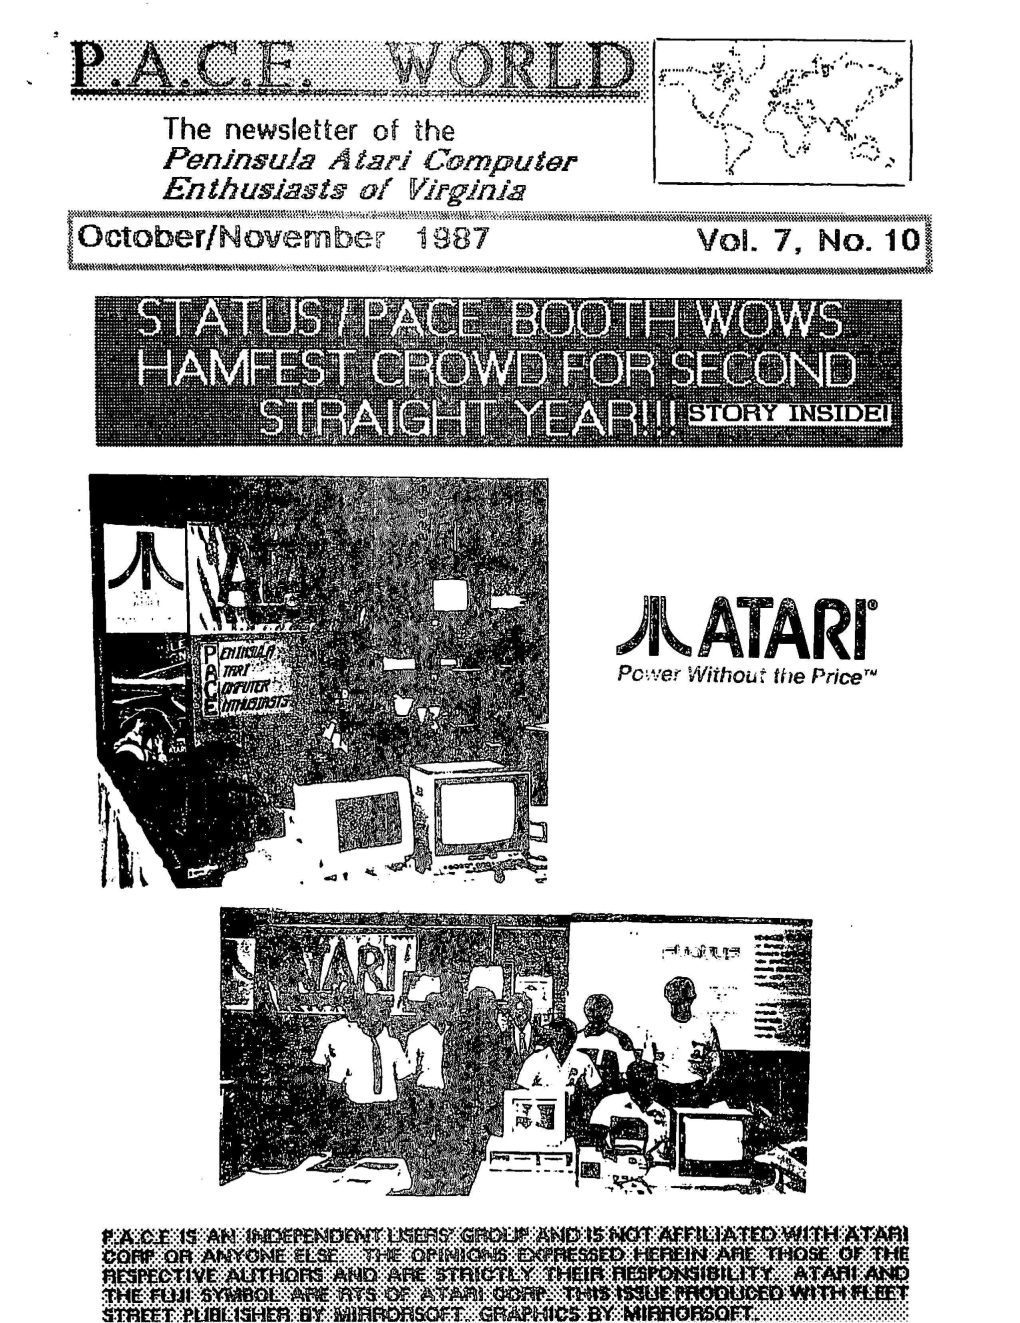 The Newsletter of the Peninsula Atari Computer Enthusiasts of Virginia